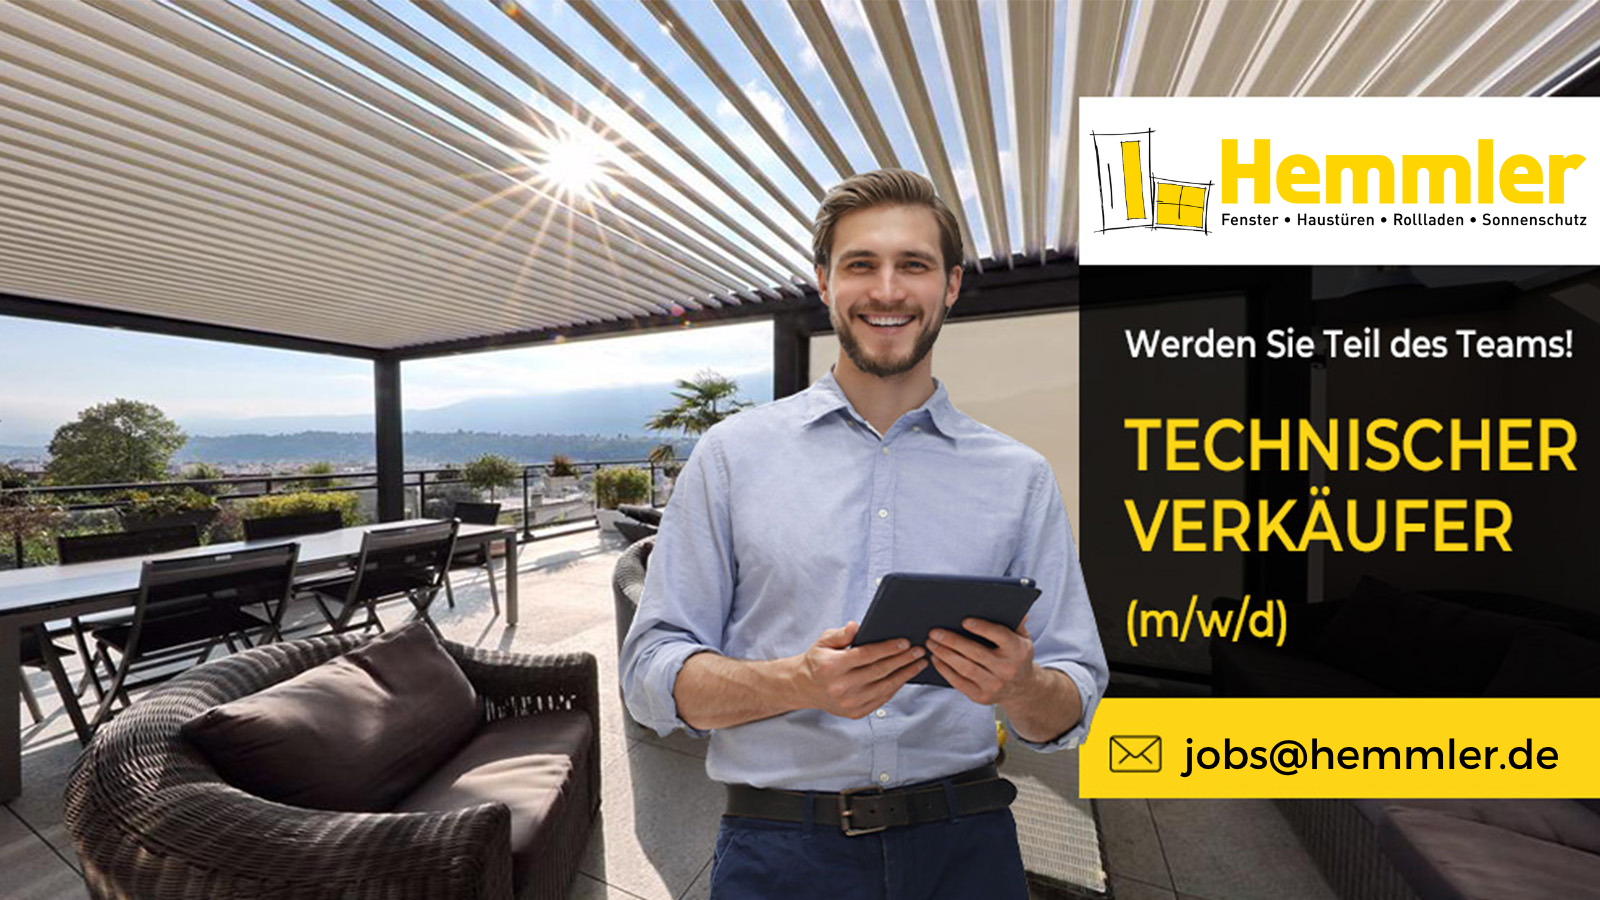 Technischer Verkäufer gesucht / Jobs / Stellenaussschreibung Hemmler, Schutterwald